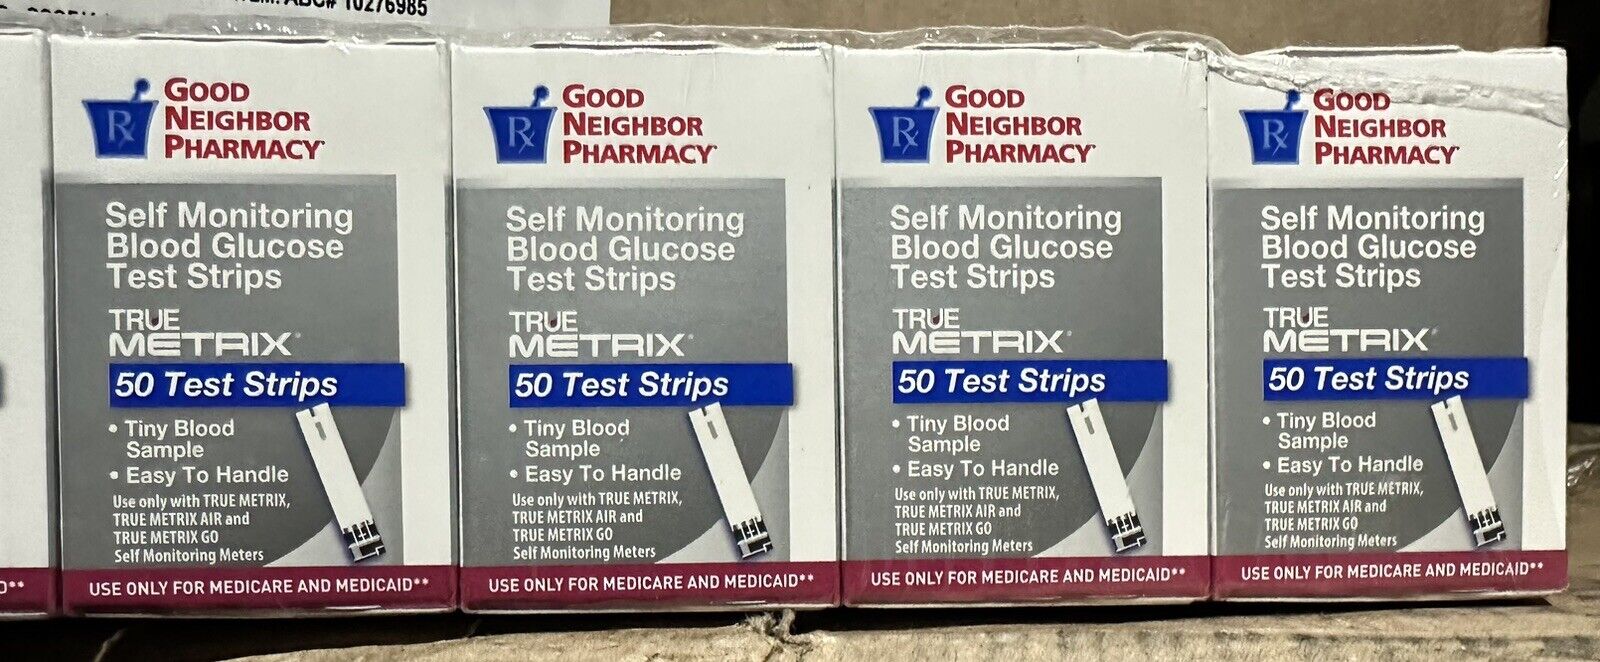 True Matrix Glucose Blood Test Trips 2 Pack (100 Test Strips Total)